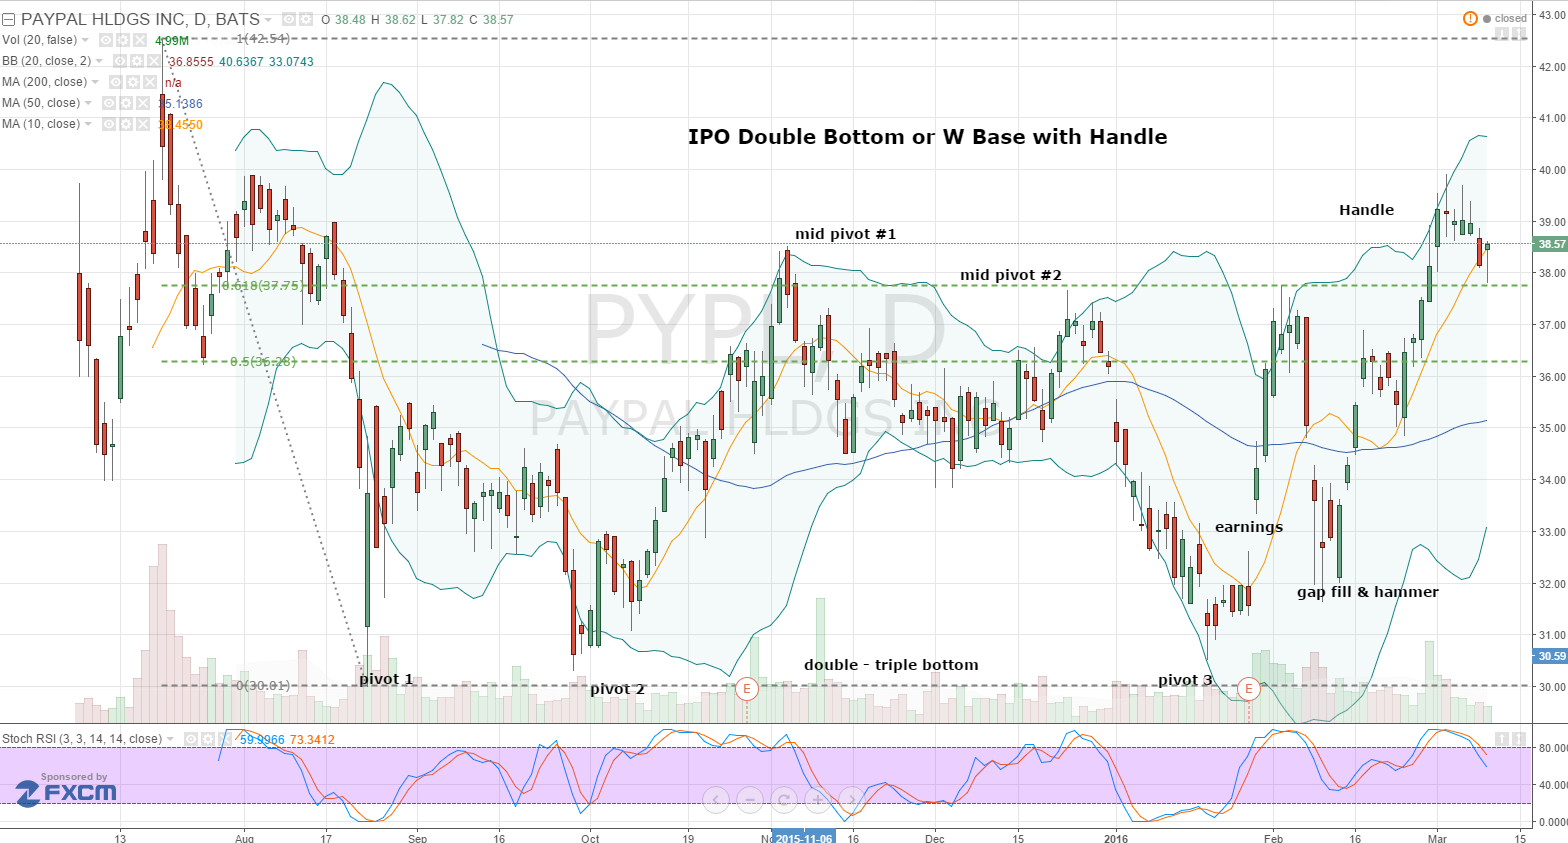 Pypl Stock Chart